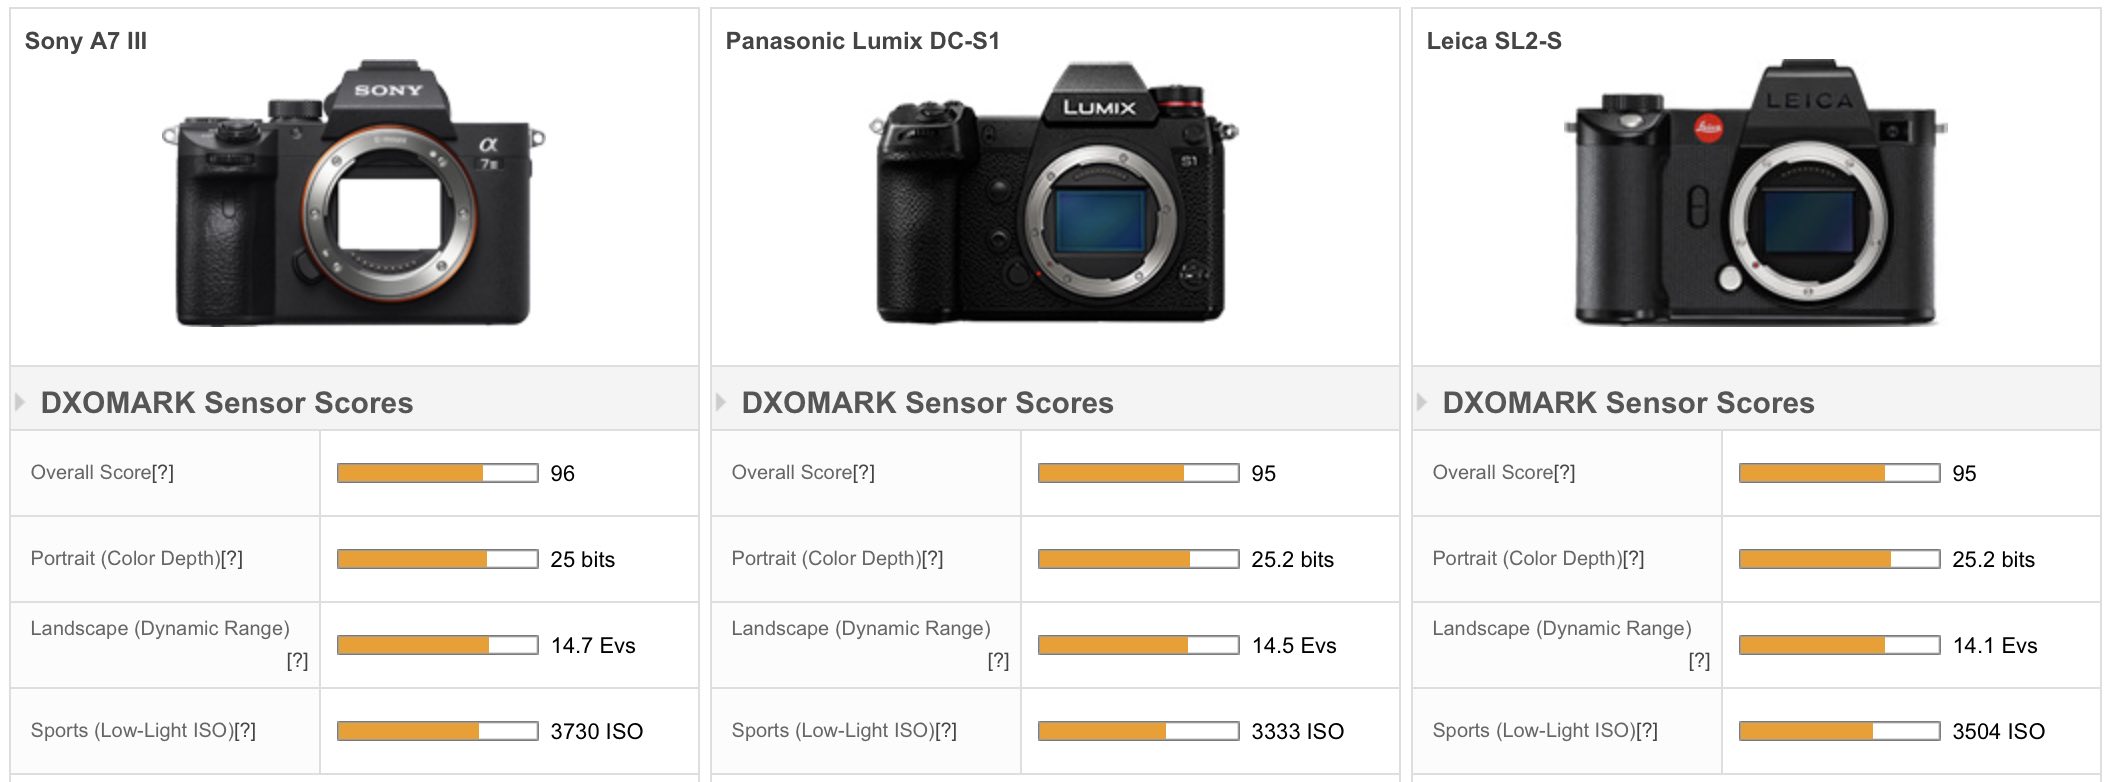 varkensvlees zwaan antwoord The Leica SL2-S scored 95 at DxOMark - Leica Rumors